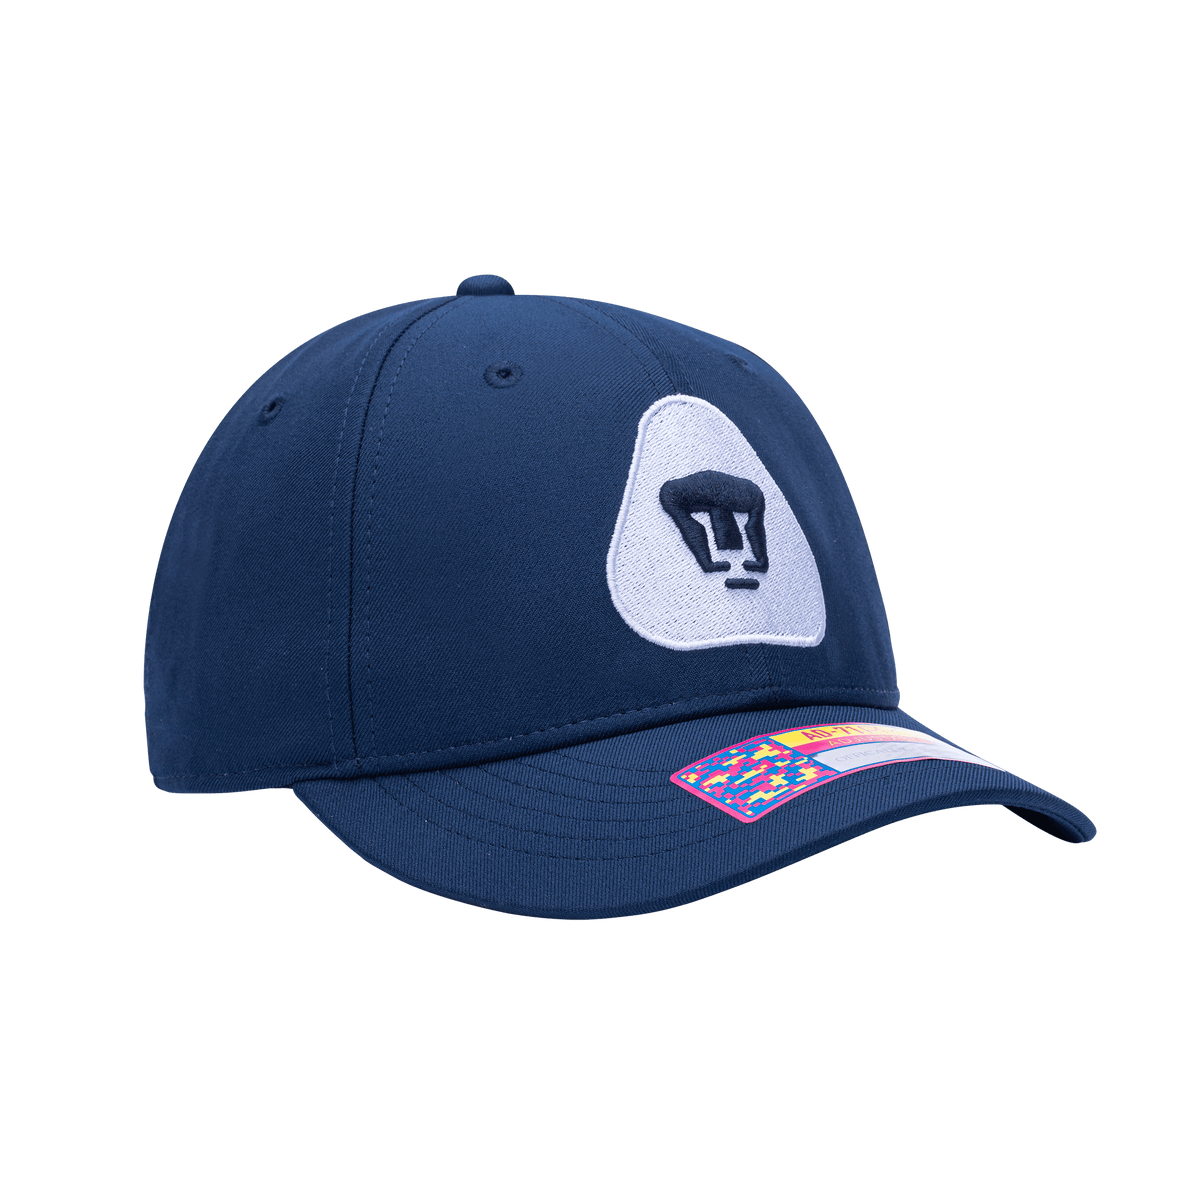 UCLA Bruins Hat Blue Fitted 7 1/8 56.8cm New Era Baseball Cap